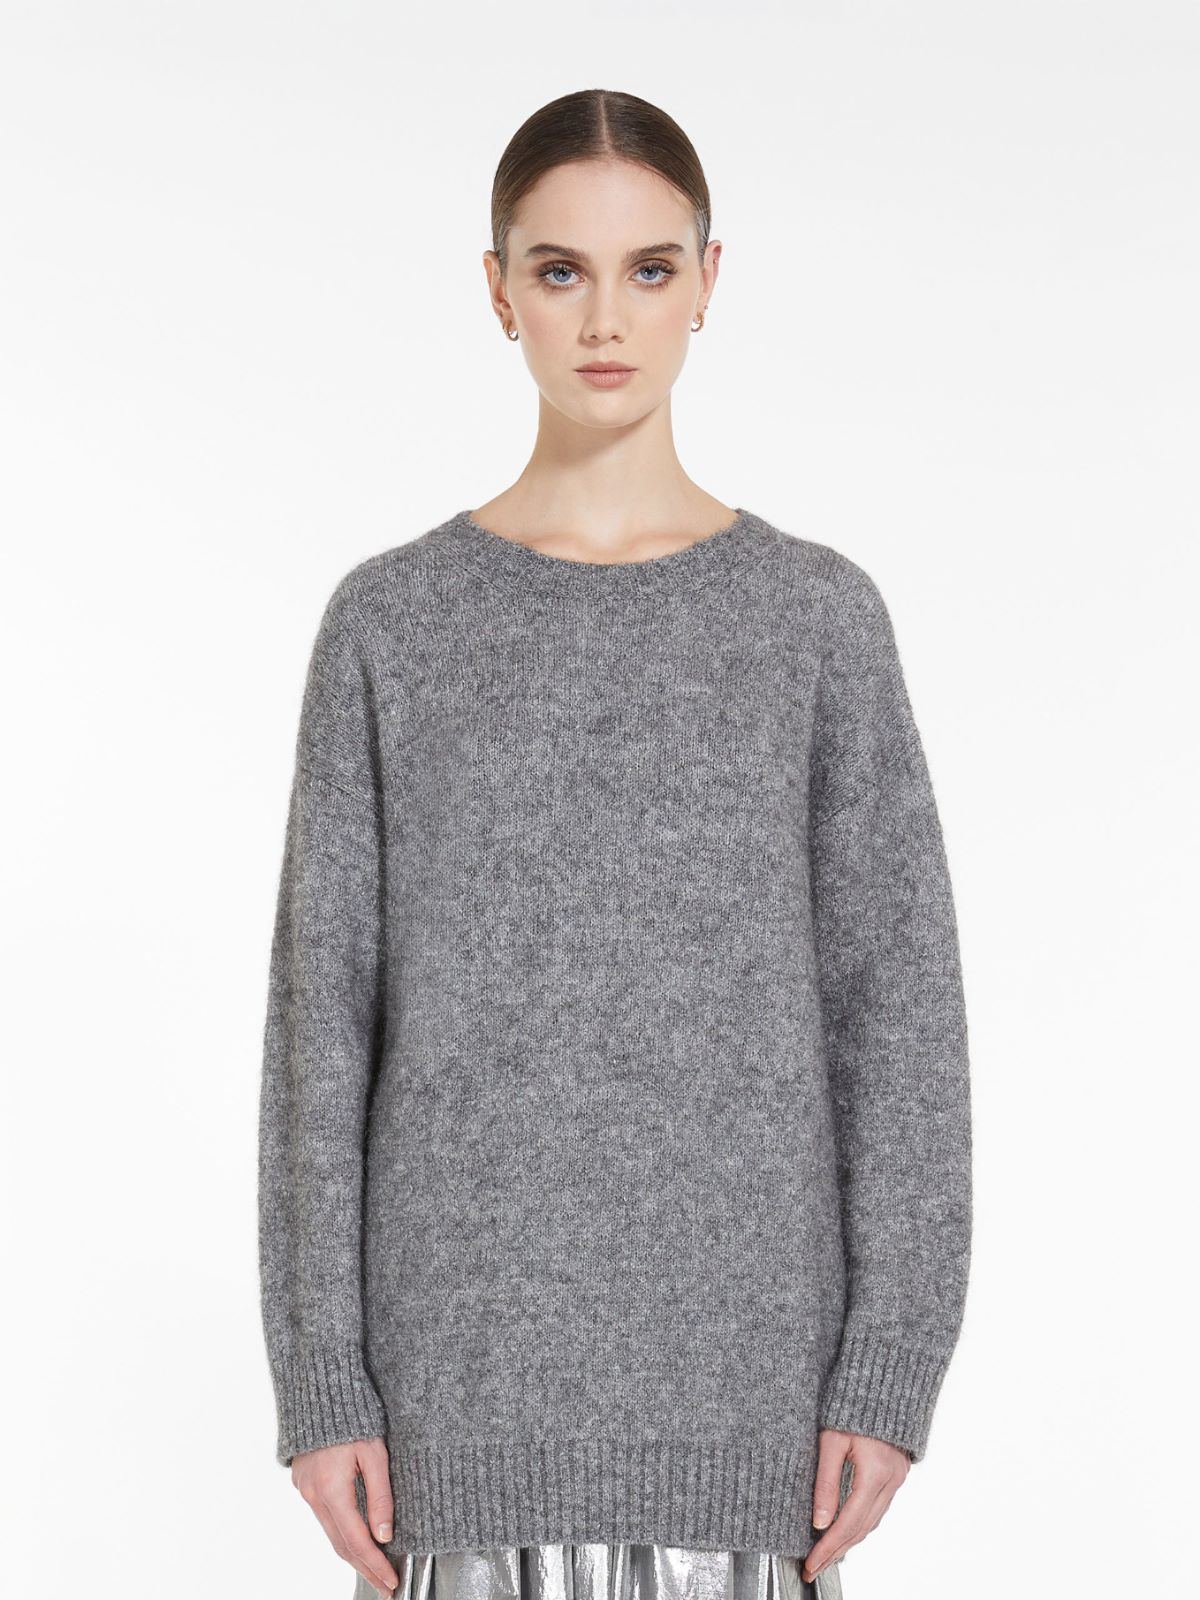 Soft pullover in alpaca and cotton, medium grey | Weekend Max Mara